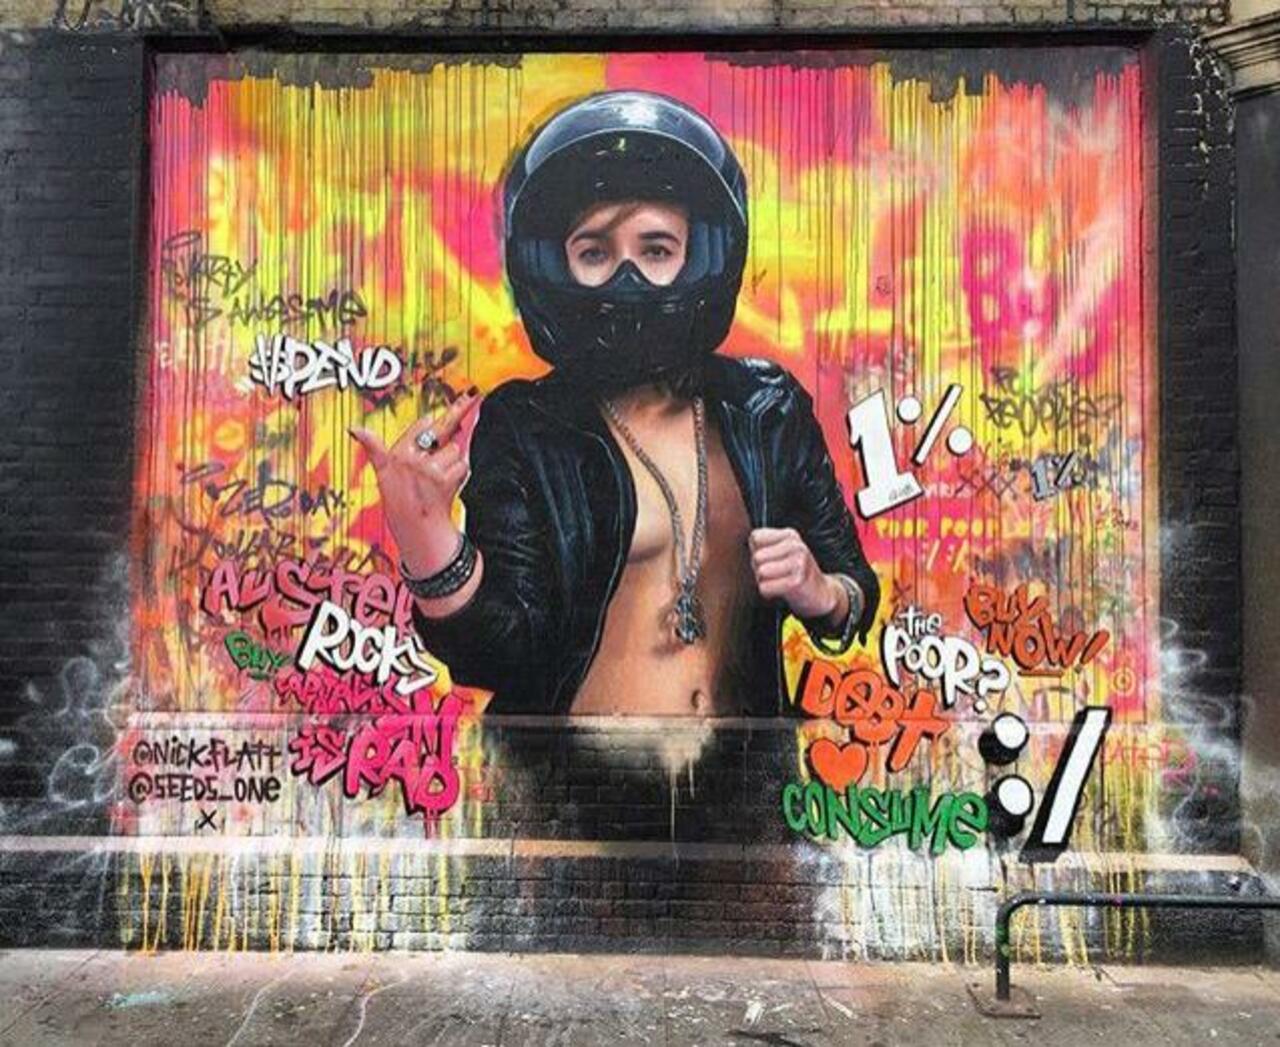 New Street Art collab by Nick Flatt &  Seeds One in London 

#art #graffiti #mural #streetart http://t.co/CSH7r7NpS9